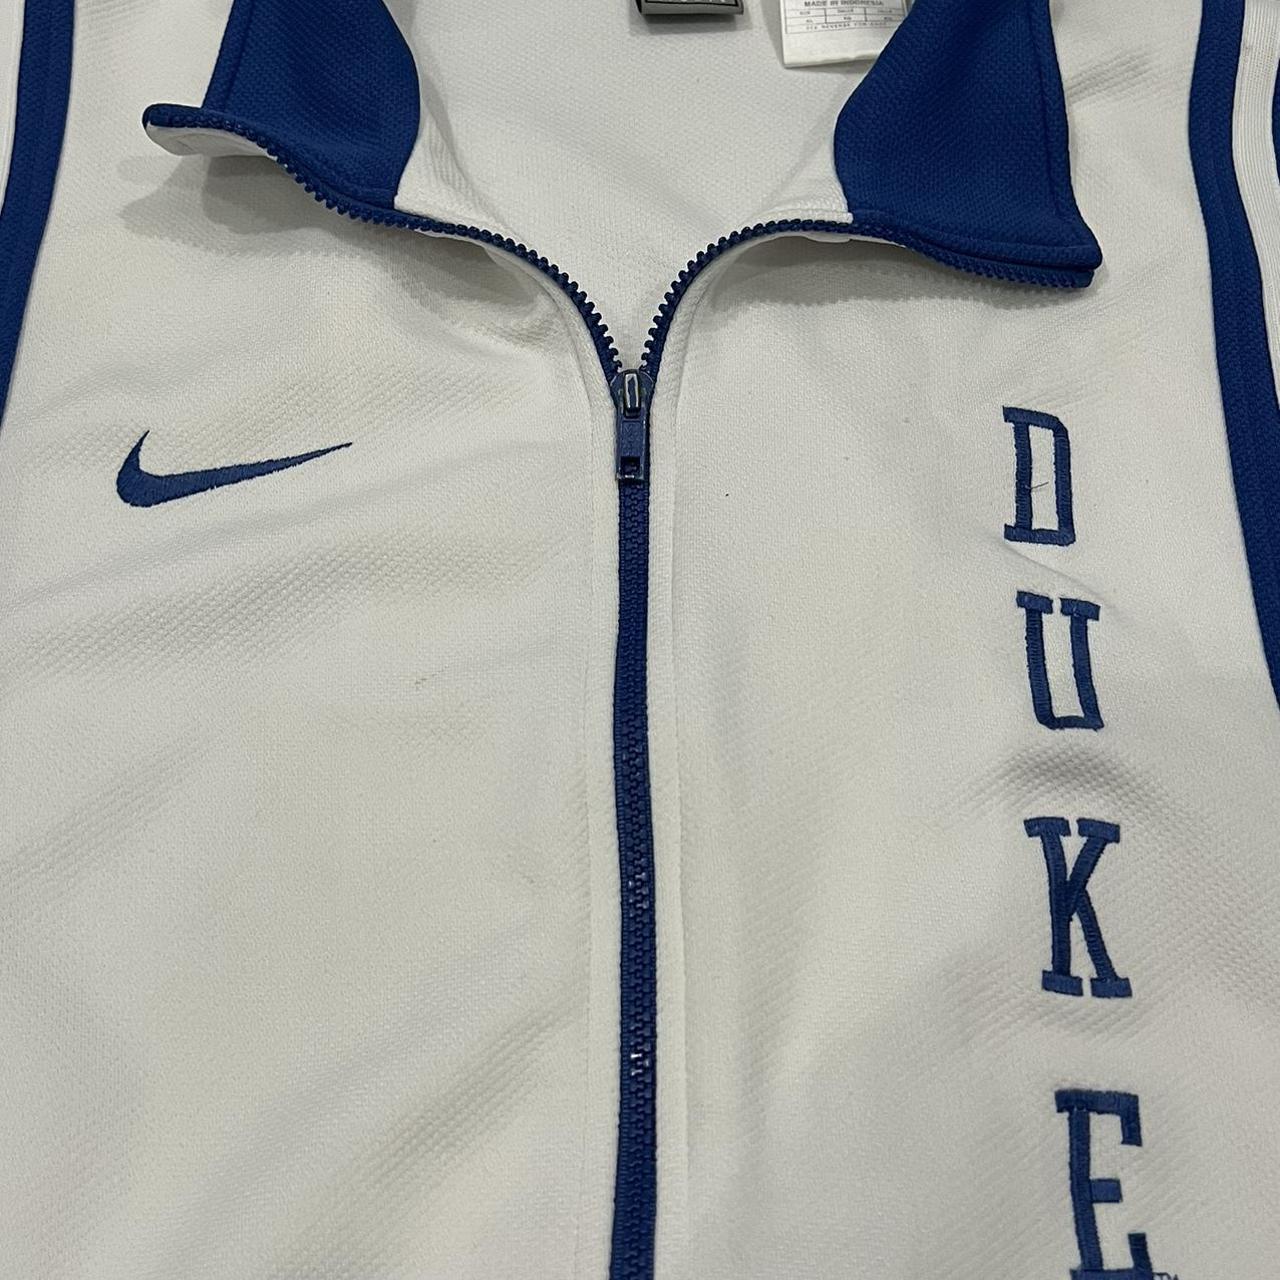 Nike Elite Duke Blue Devils NCAAM Basketball Jersey - Depop